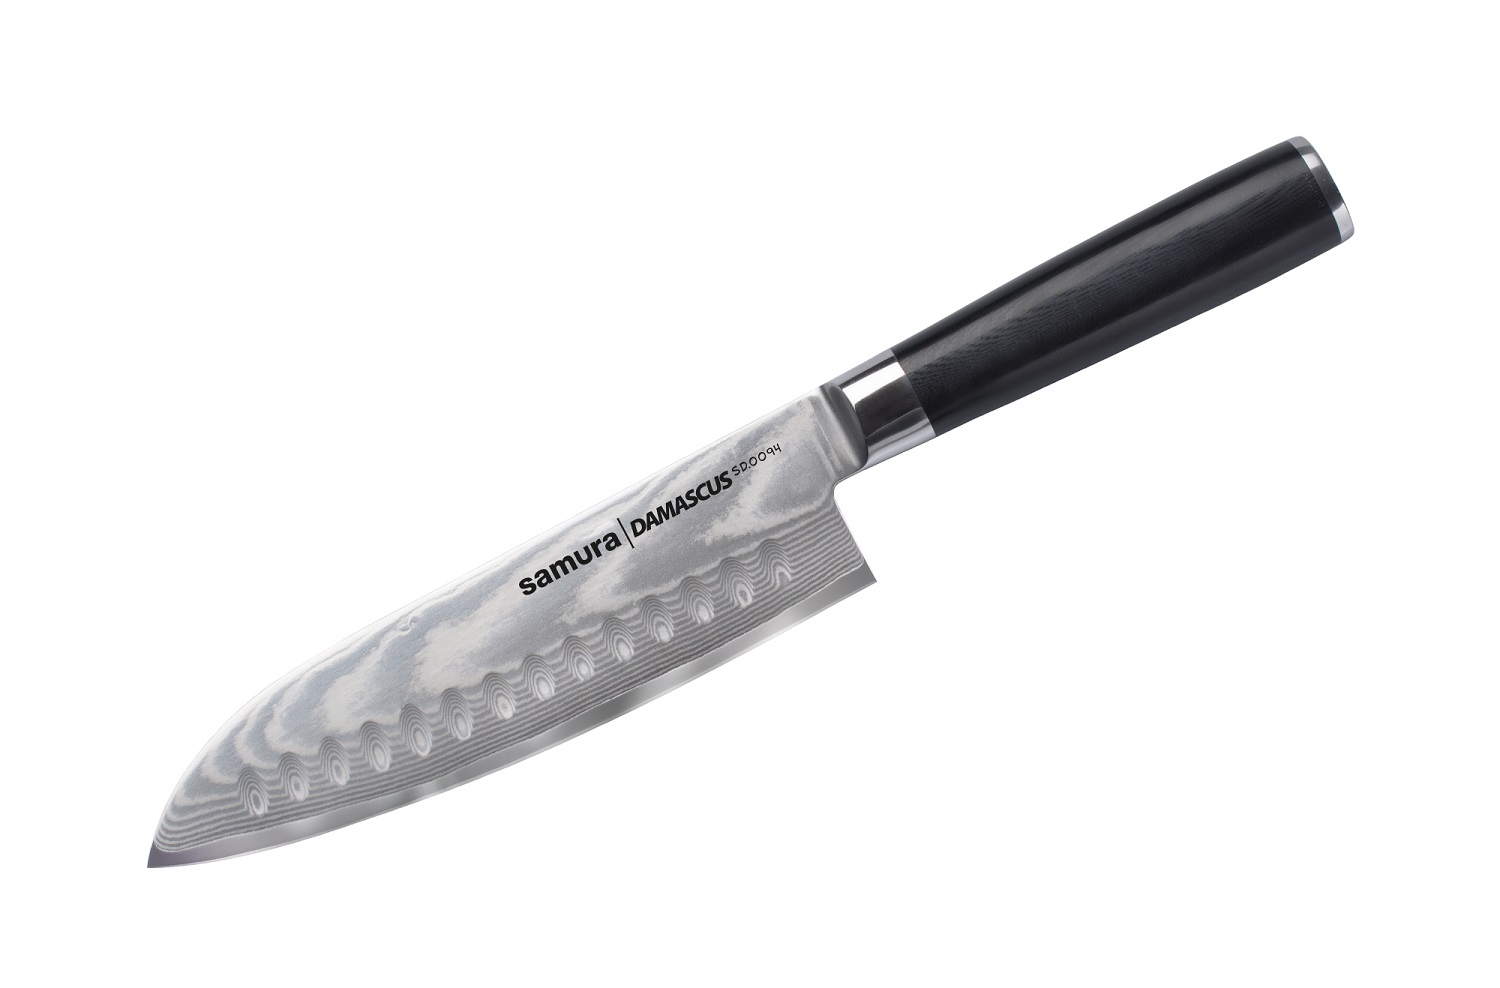 Нож Samura сантоку Damascus, 18 см, G-10, дамаск 67 слоев нож samura овощной damascus 9 см g 10 дамаск 67 слоев